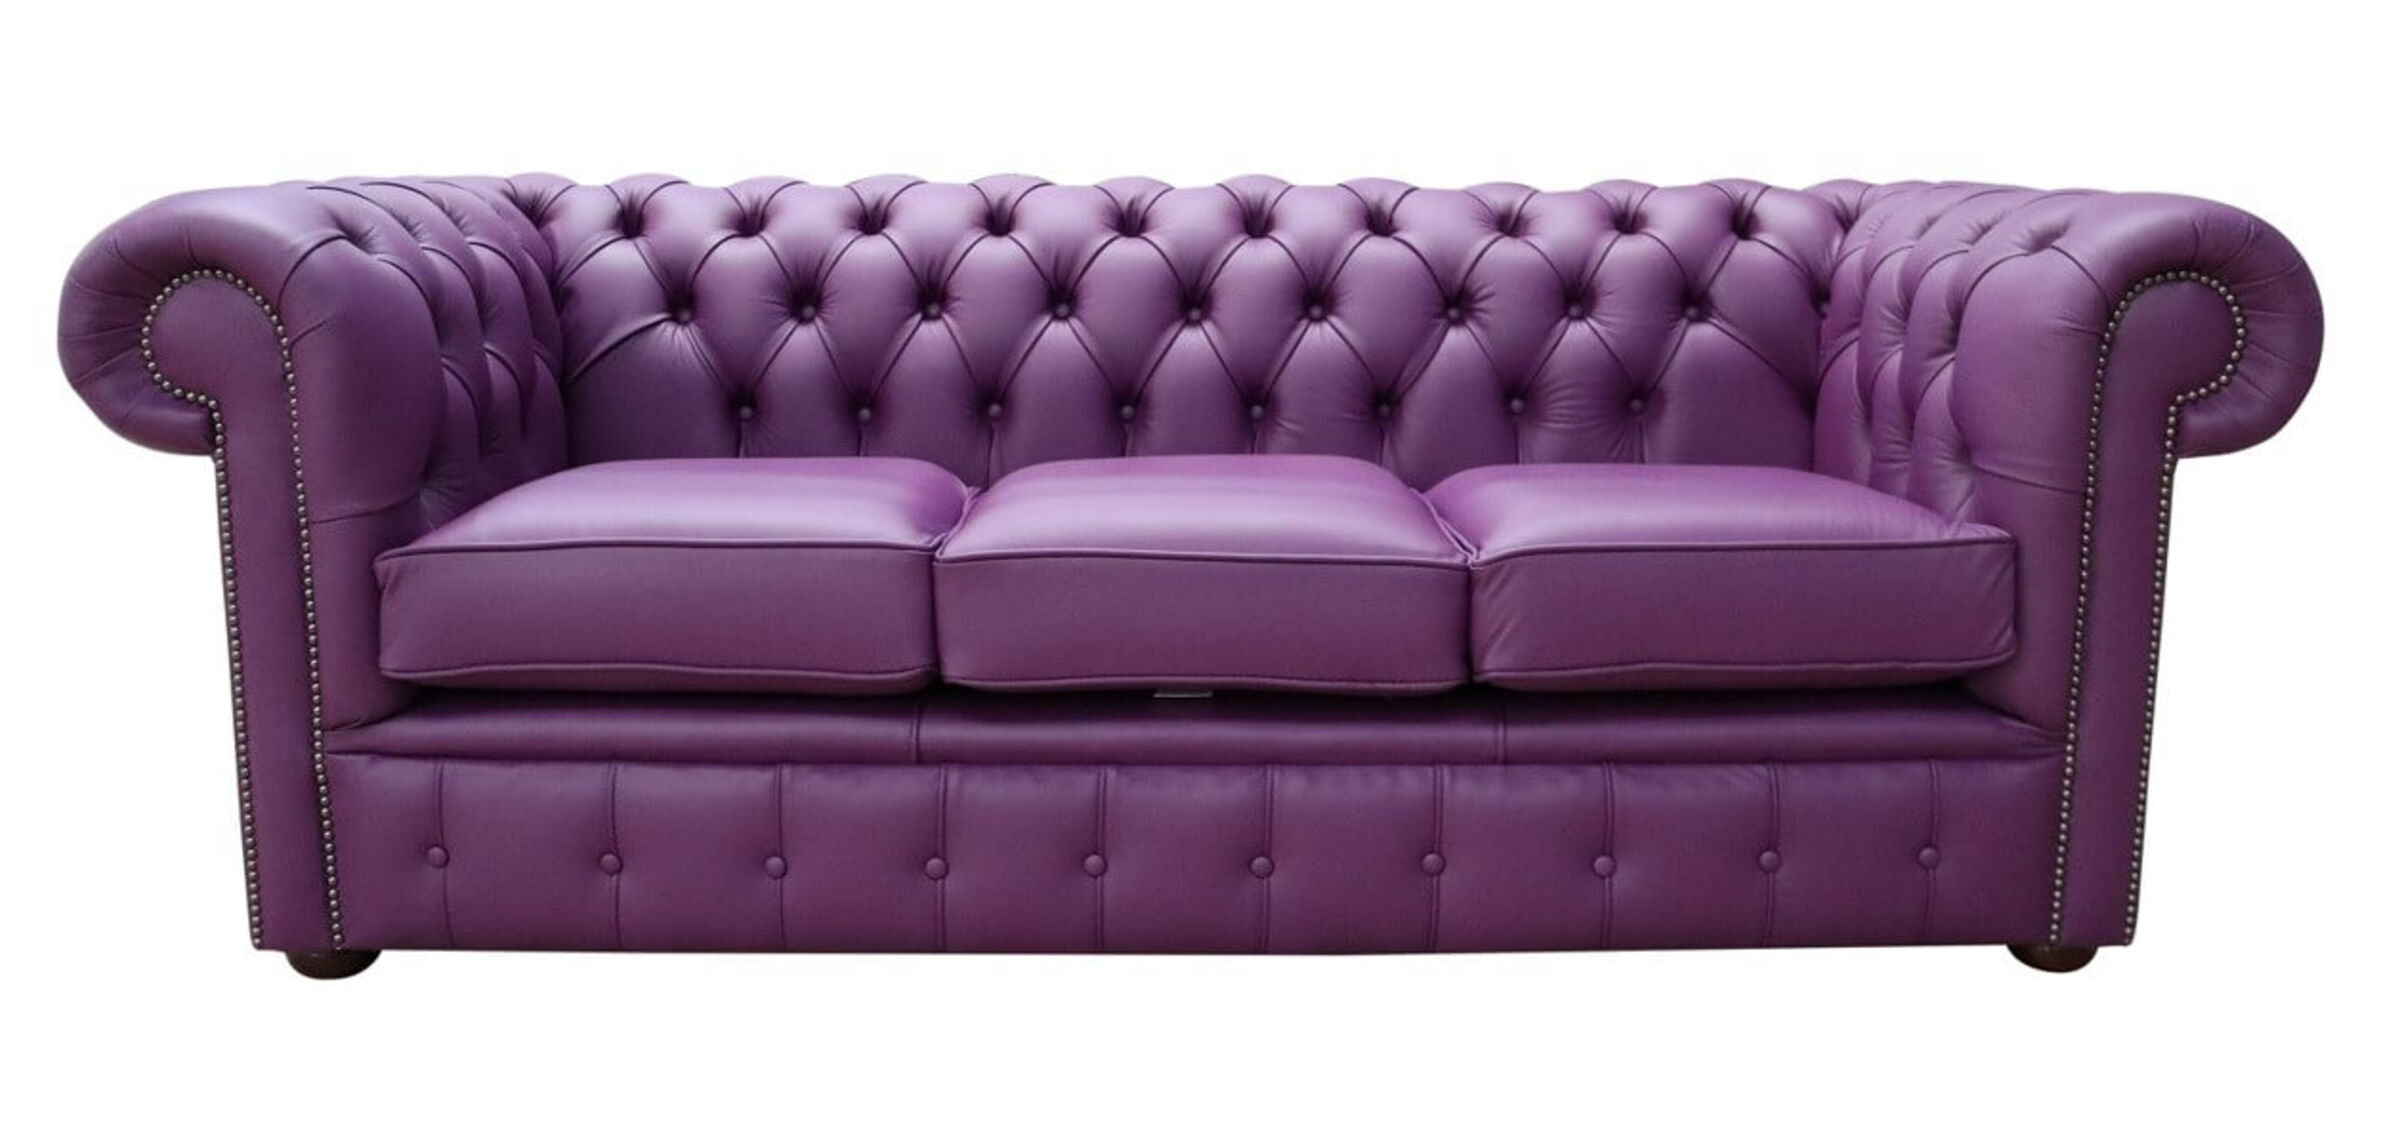 purple leather sofa and loveseat